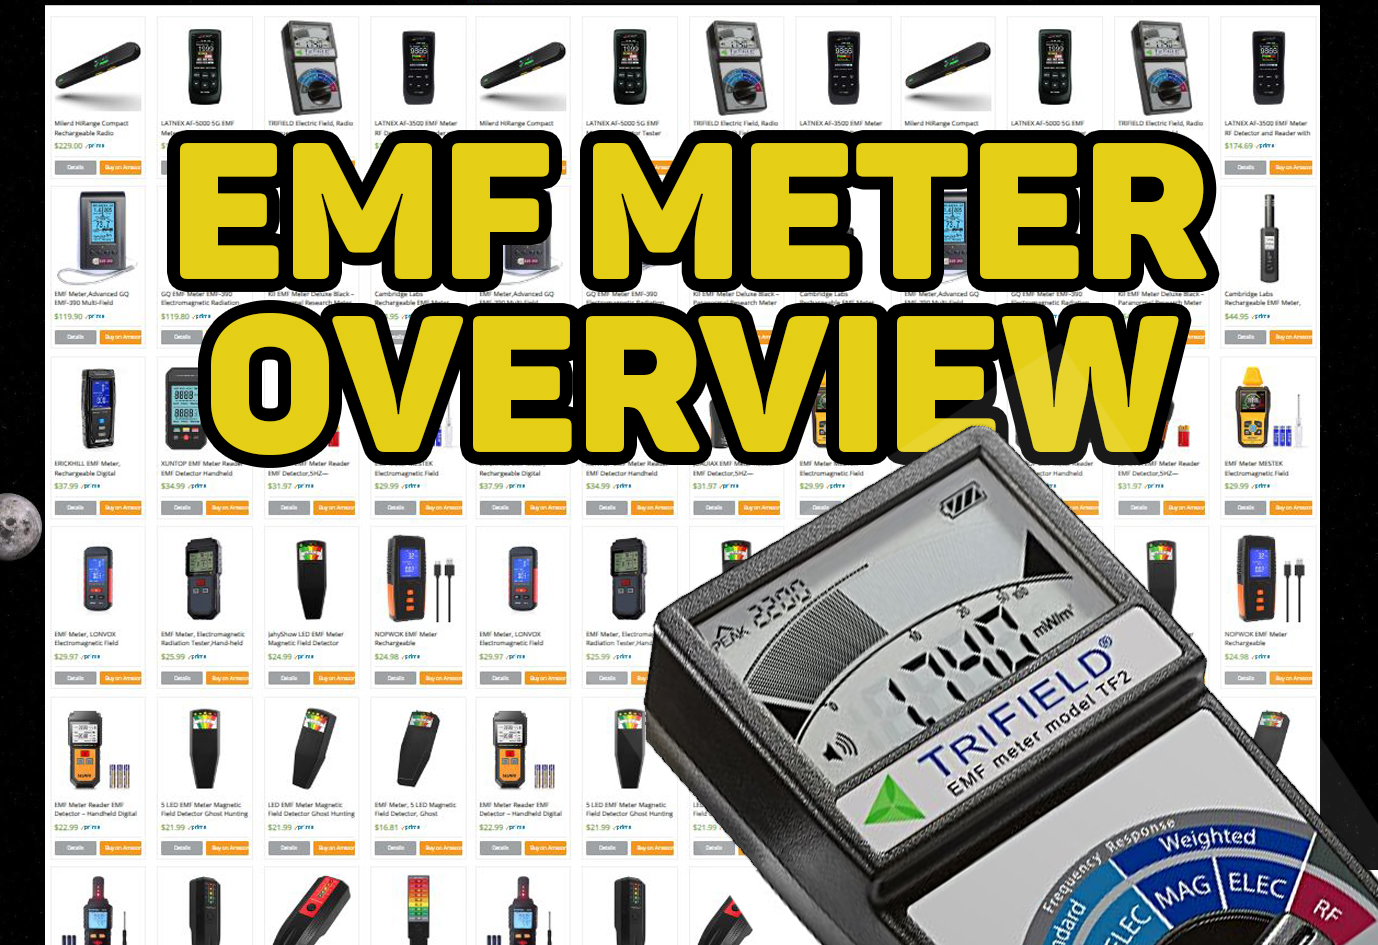 EMF Meter overview